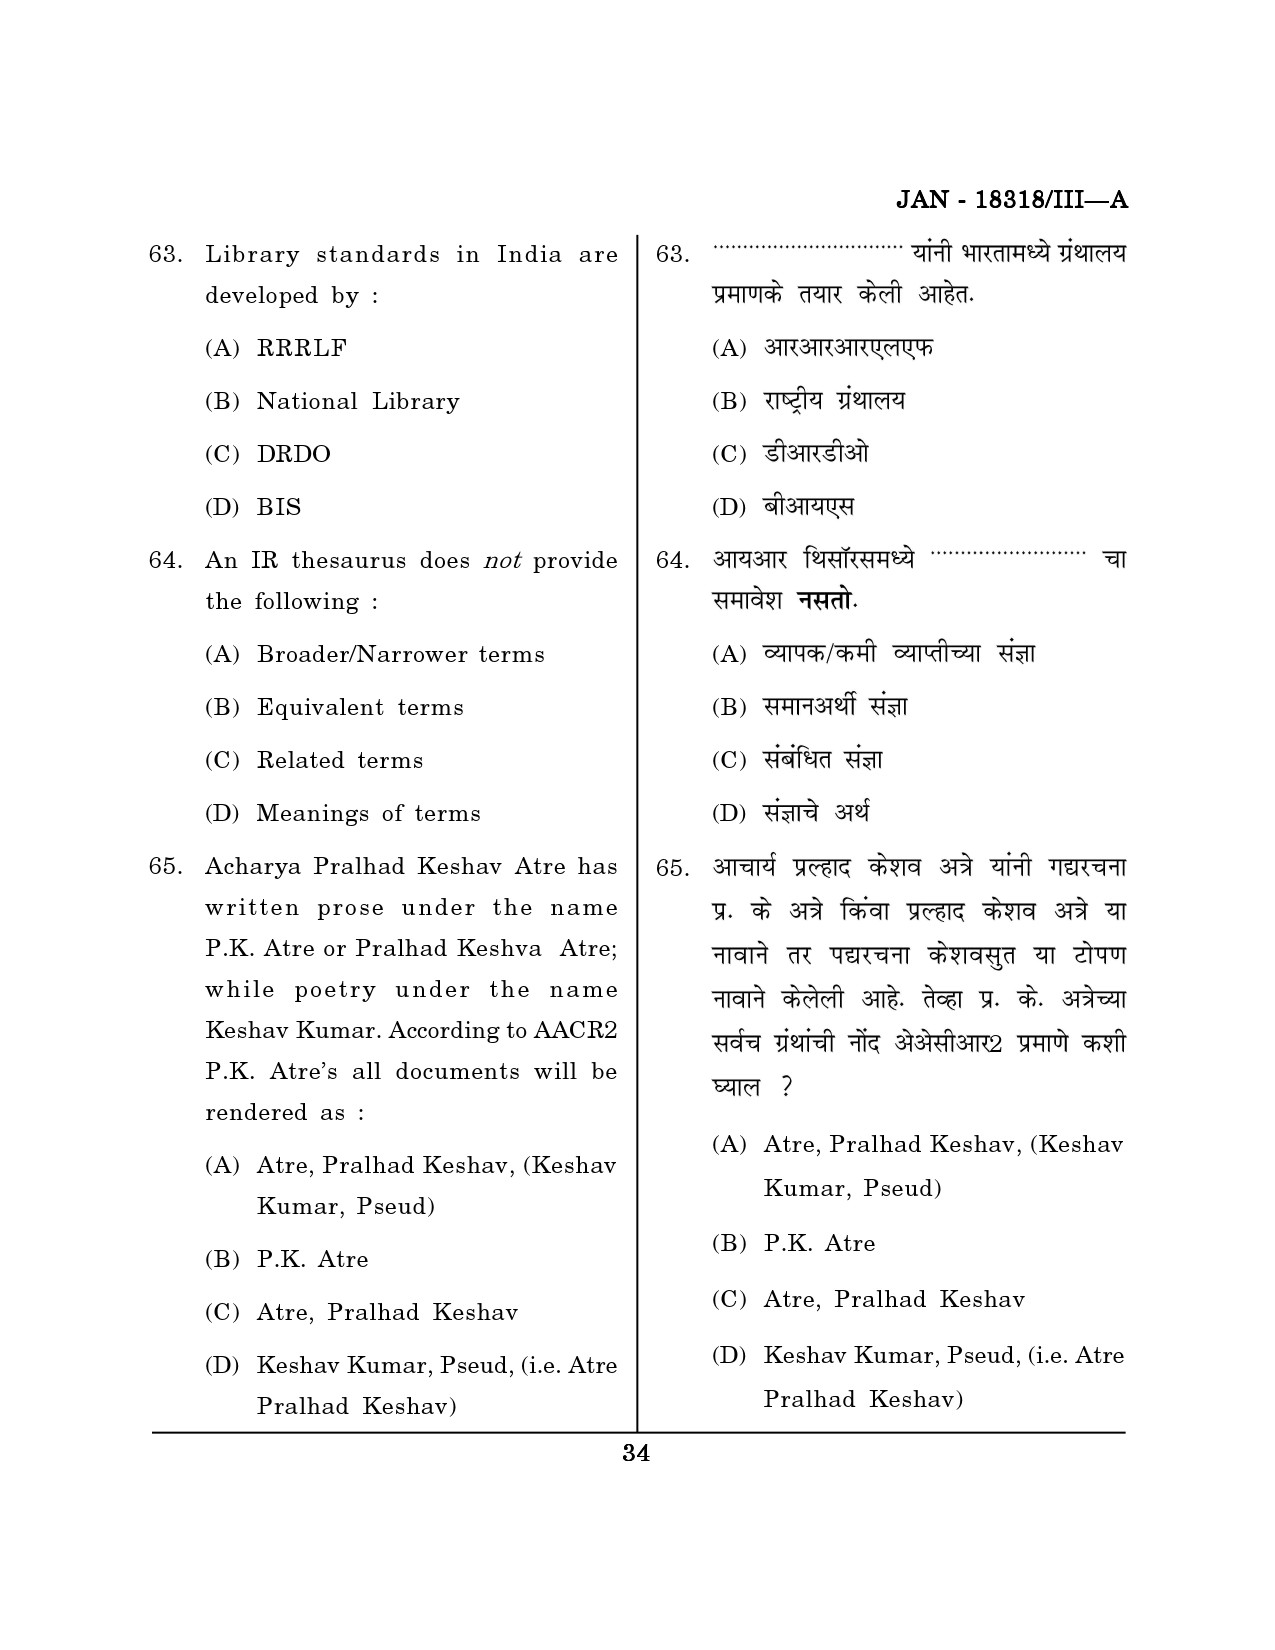 Maharashtra SET Library Information Science Question Paper III January 2018 33